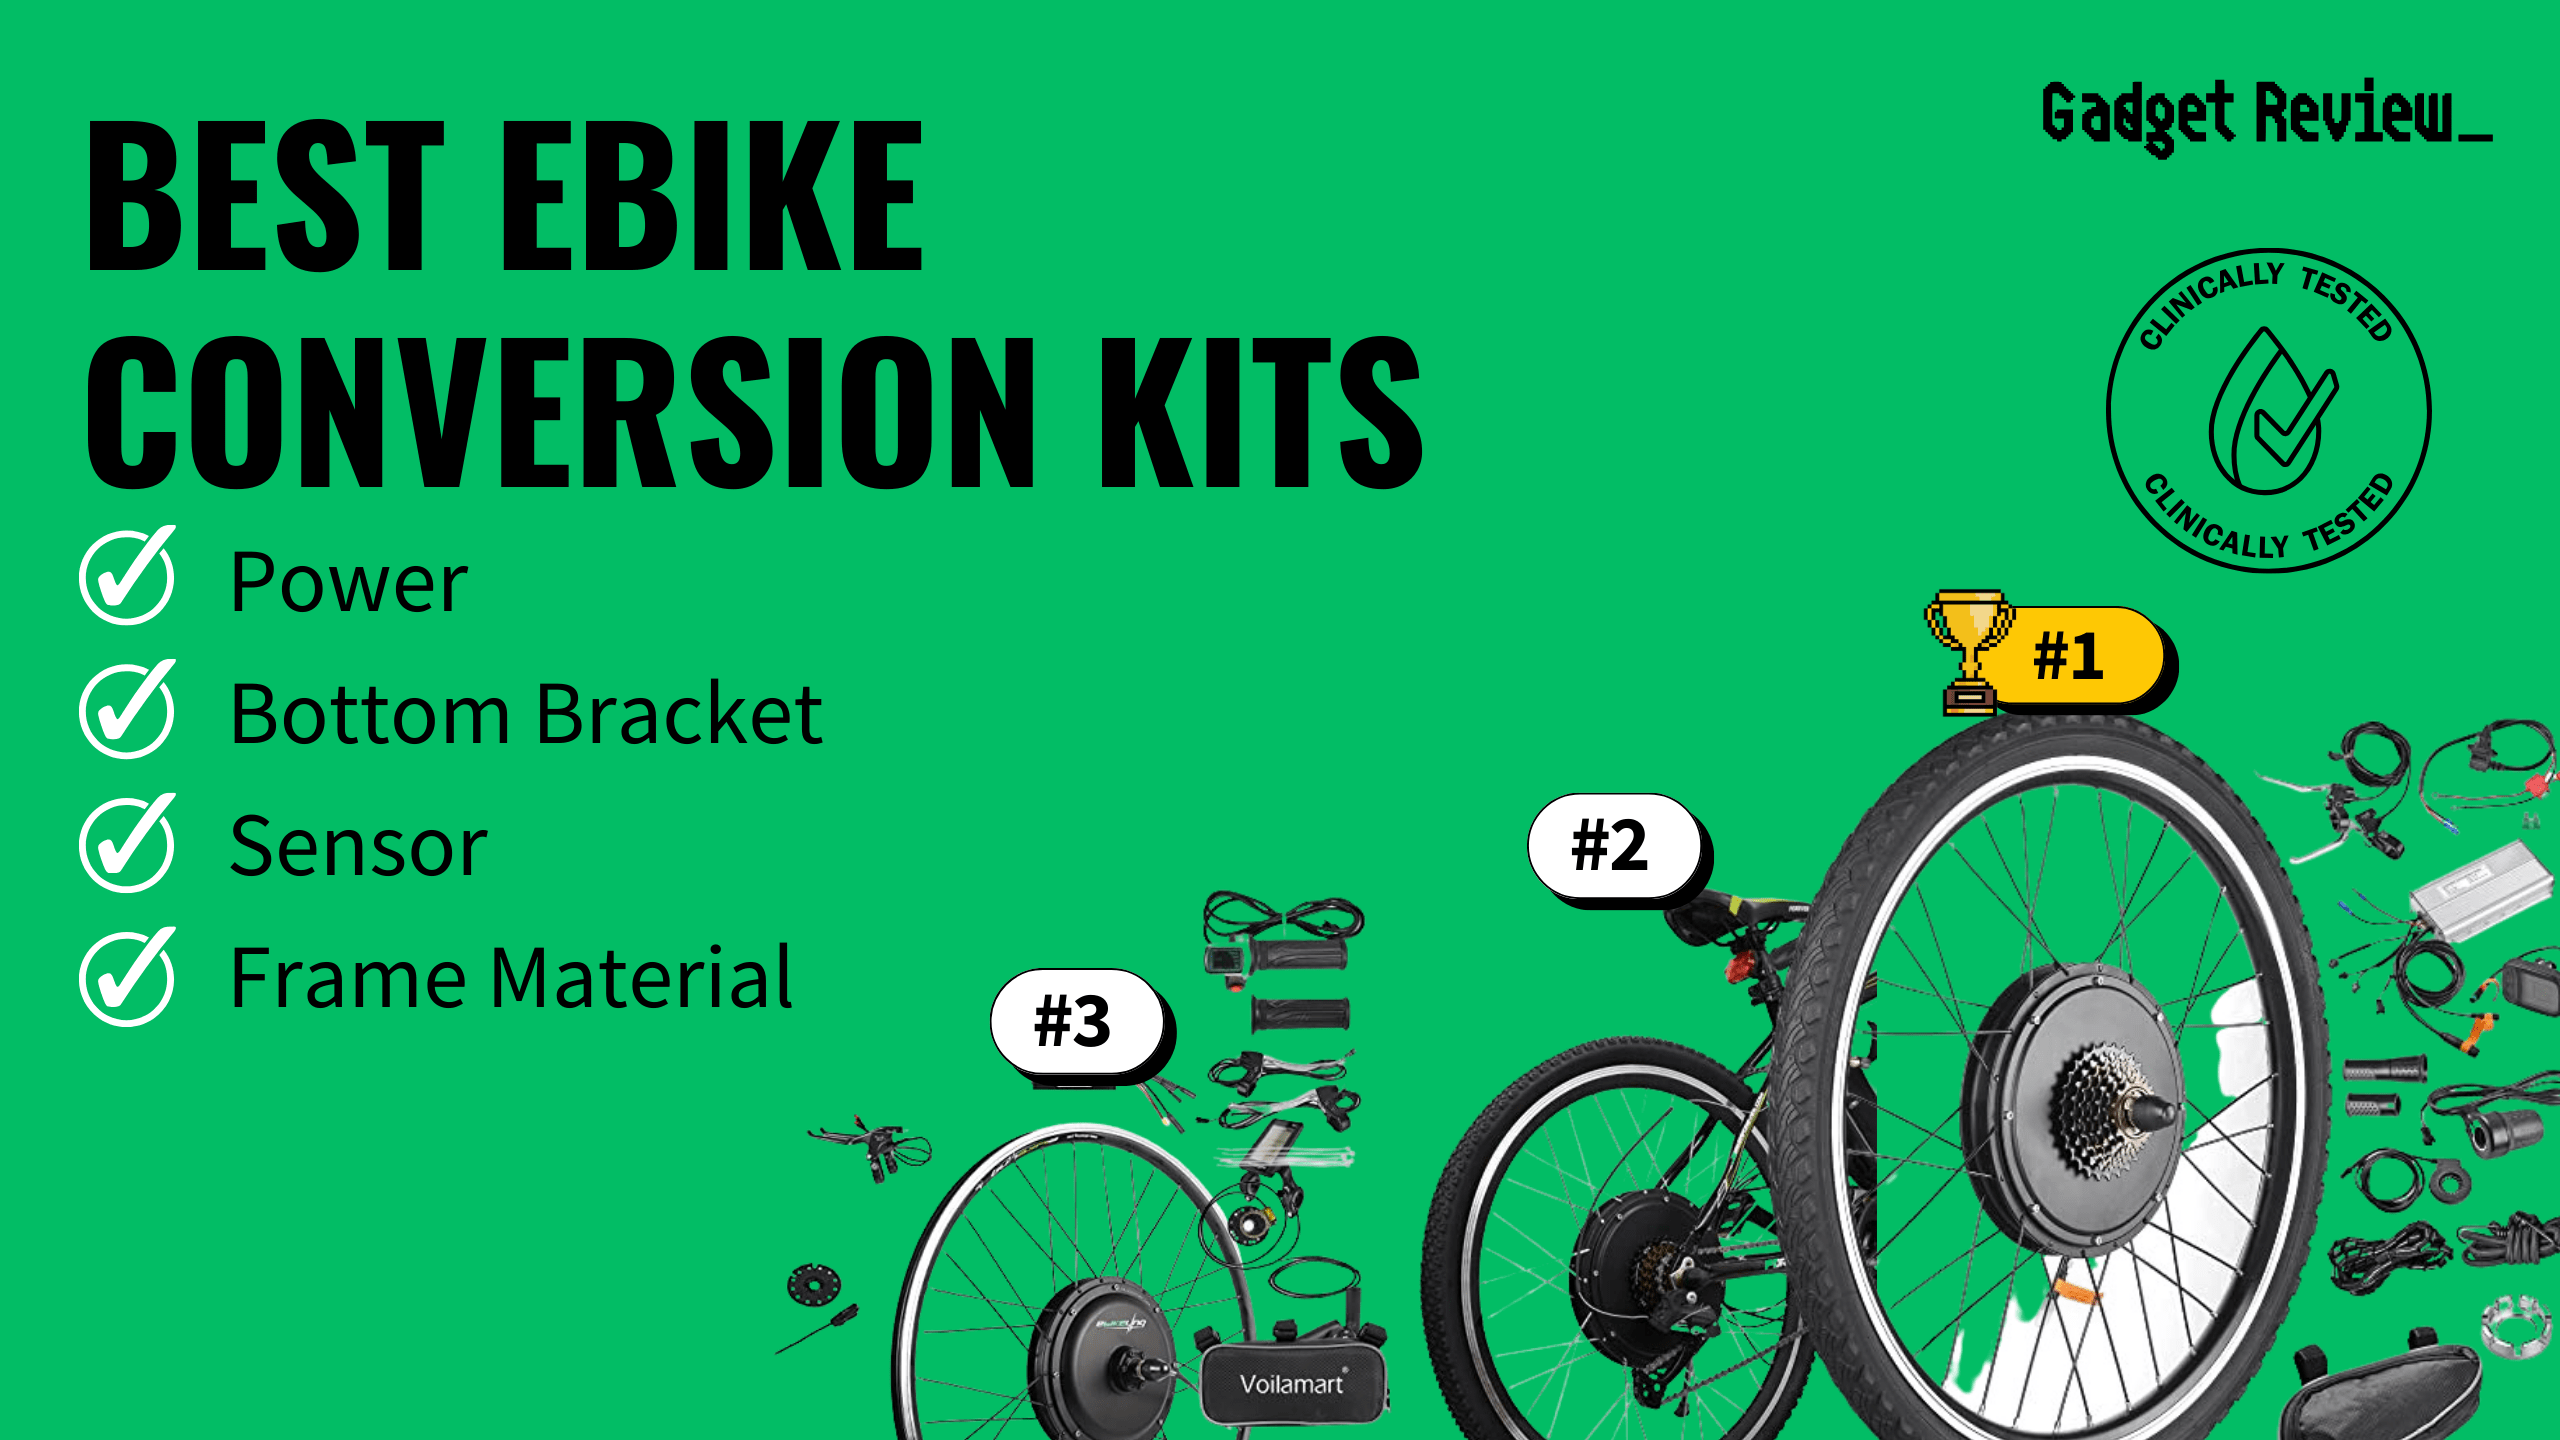 Best eBike Conversion Kits